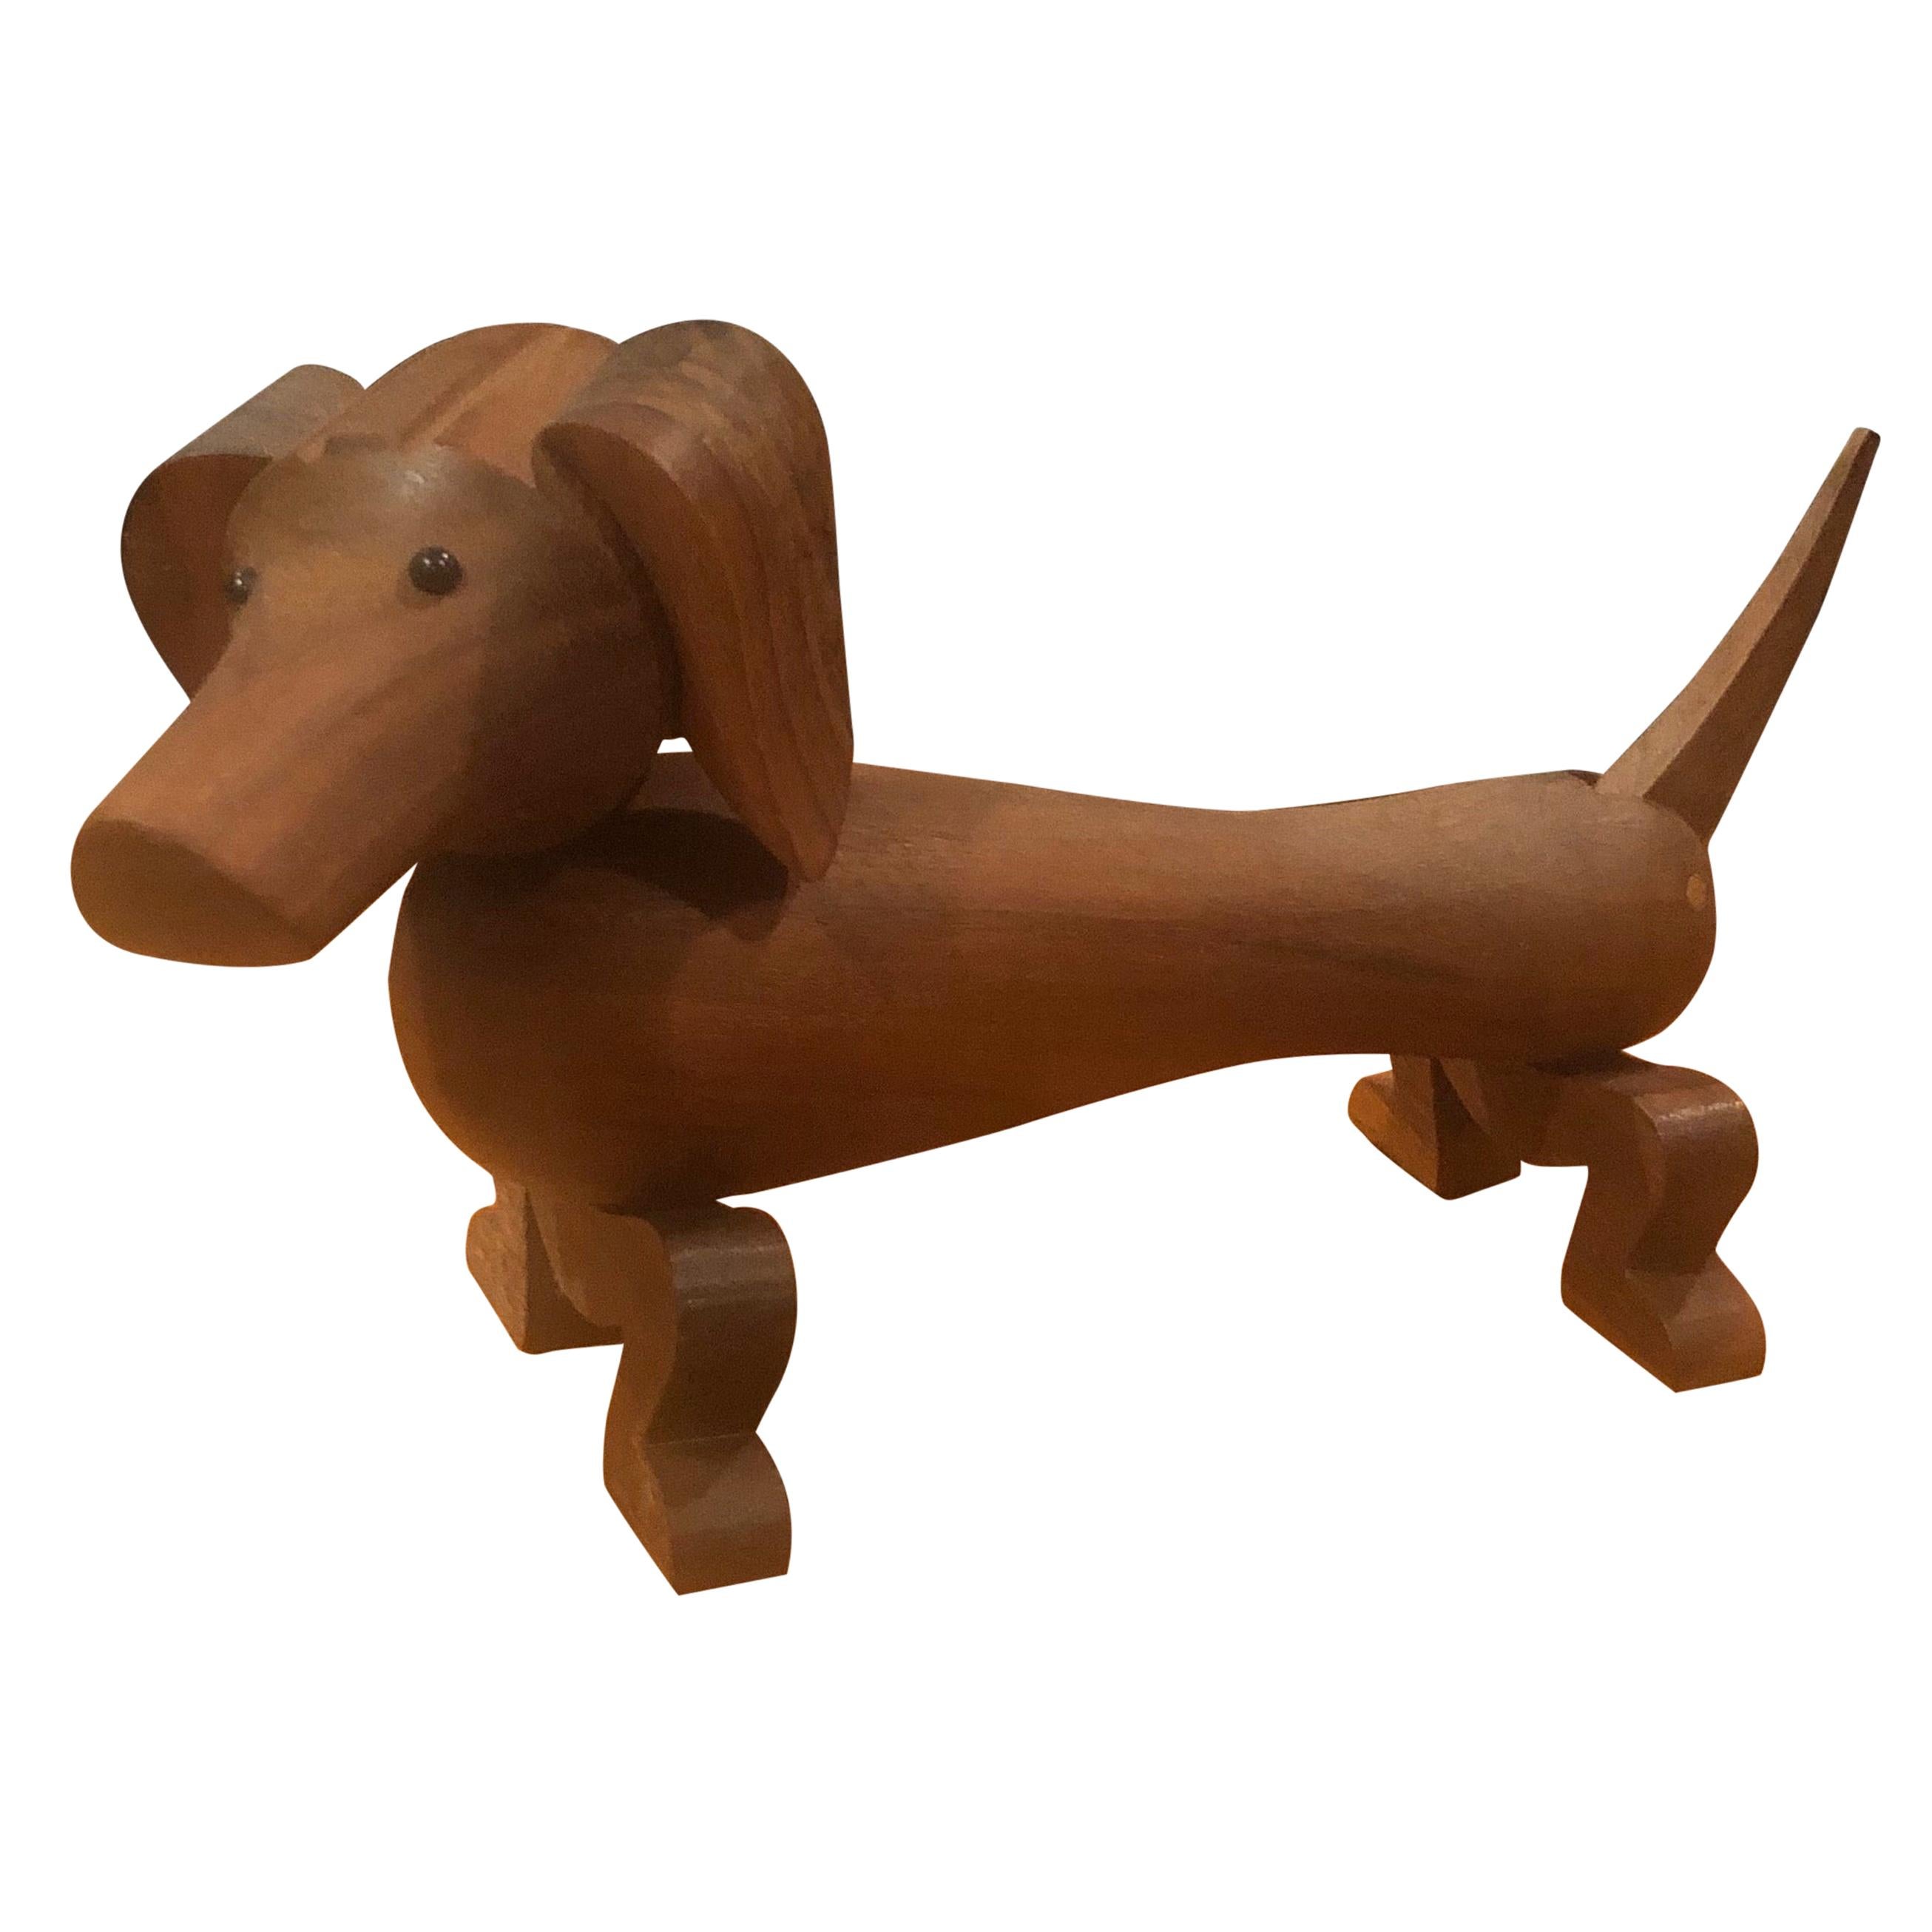 Articulated Toy Dachshund / Dog by Kay Bojesen